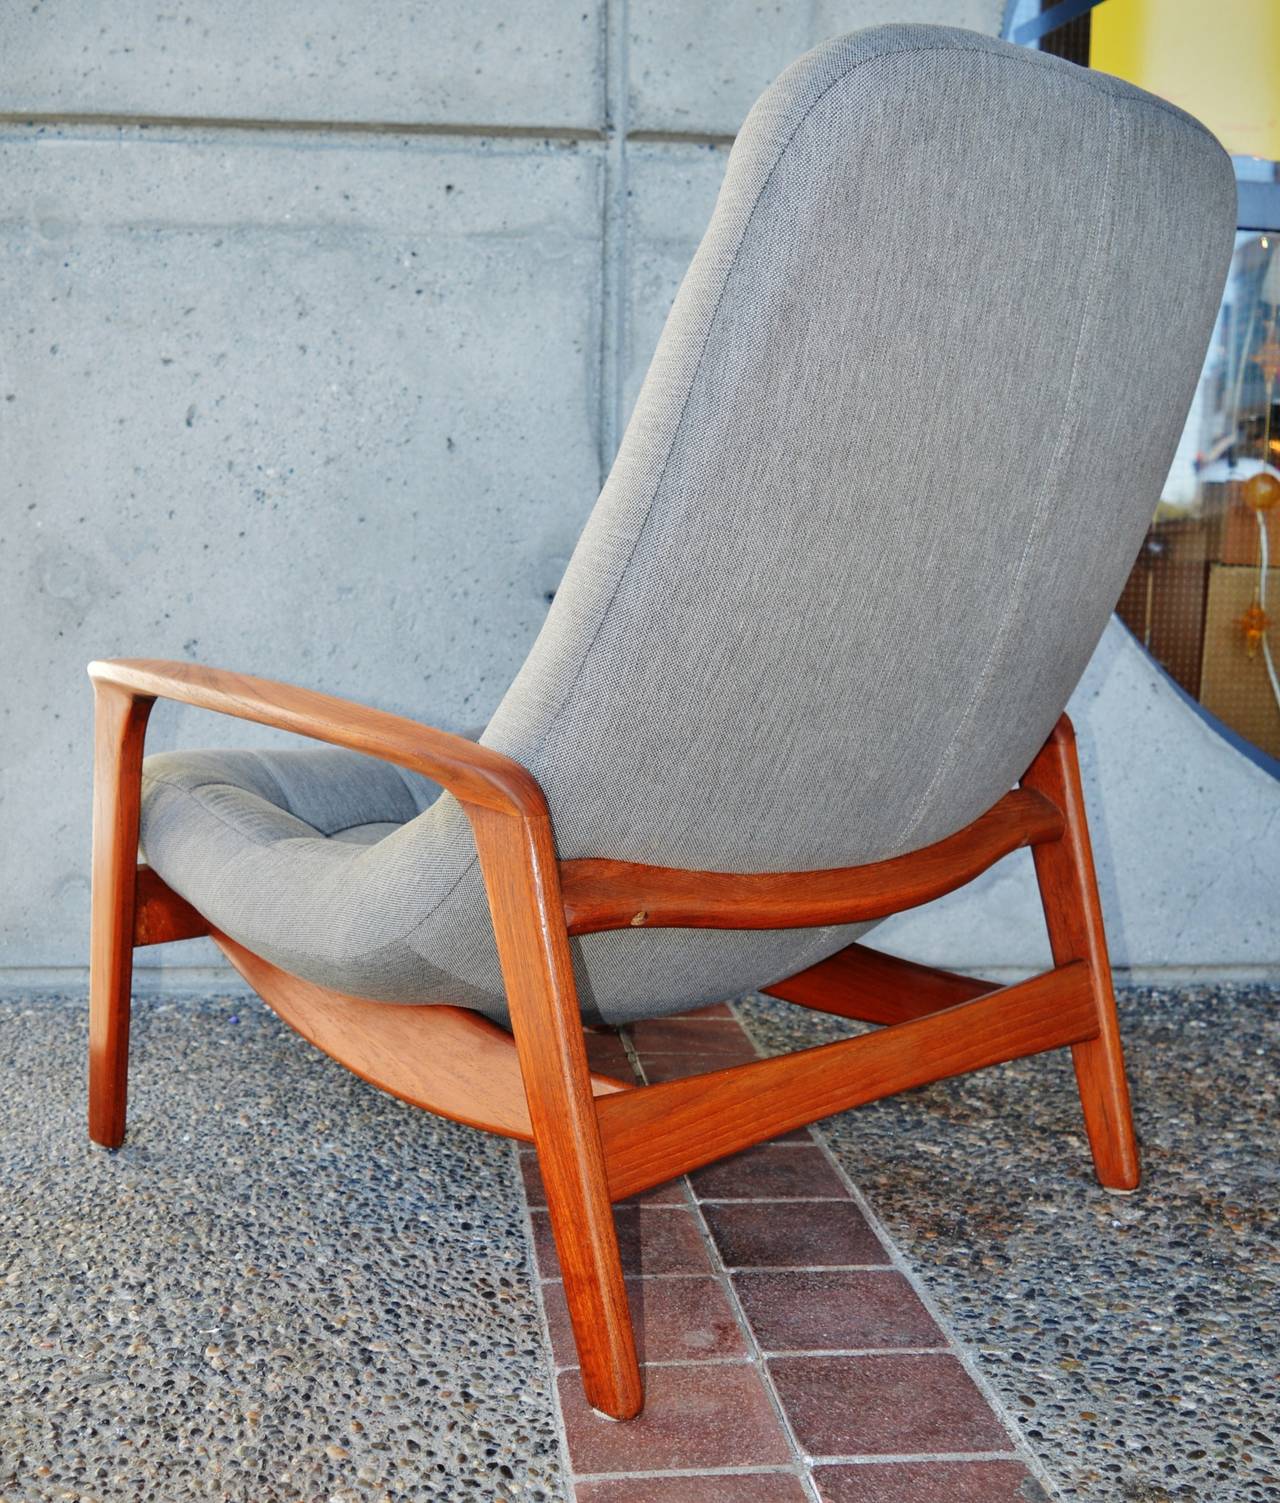 20th Century Danish Modern Style Teak Button-Tufted Lounge Chair & Ottoman